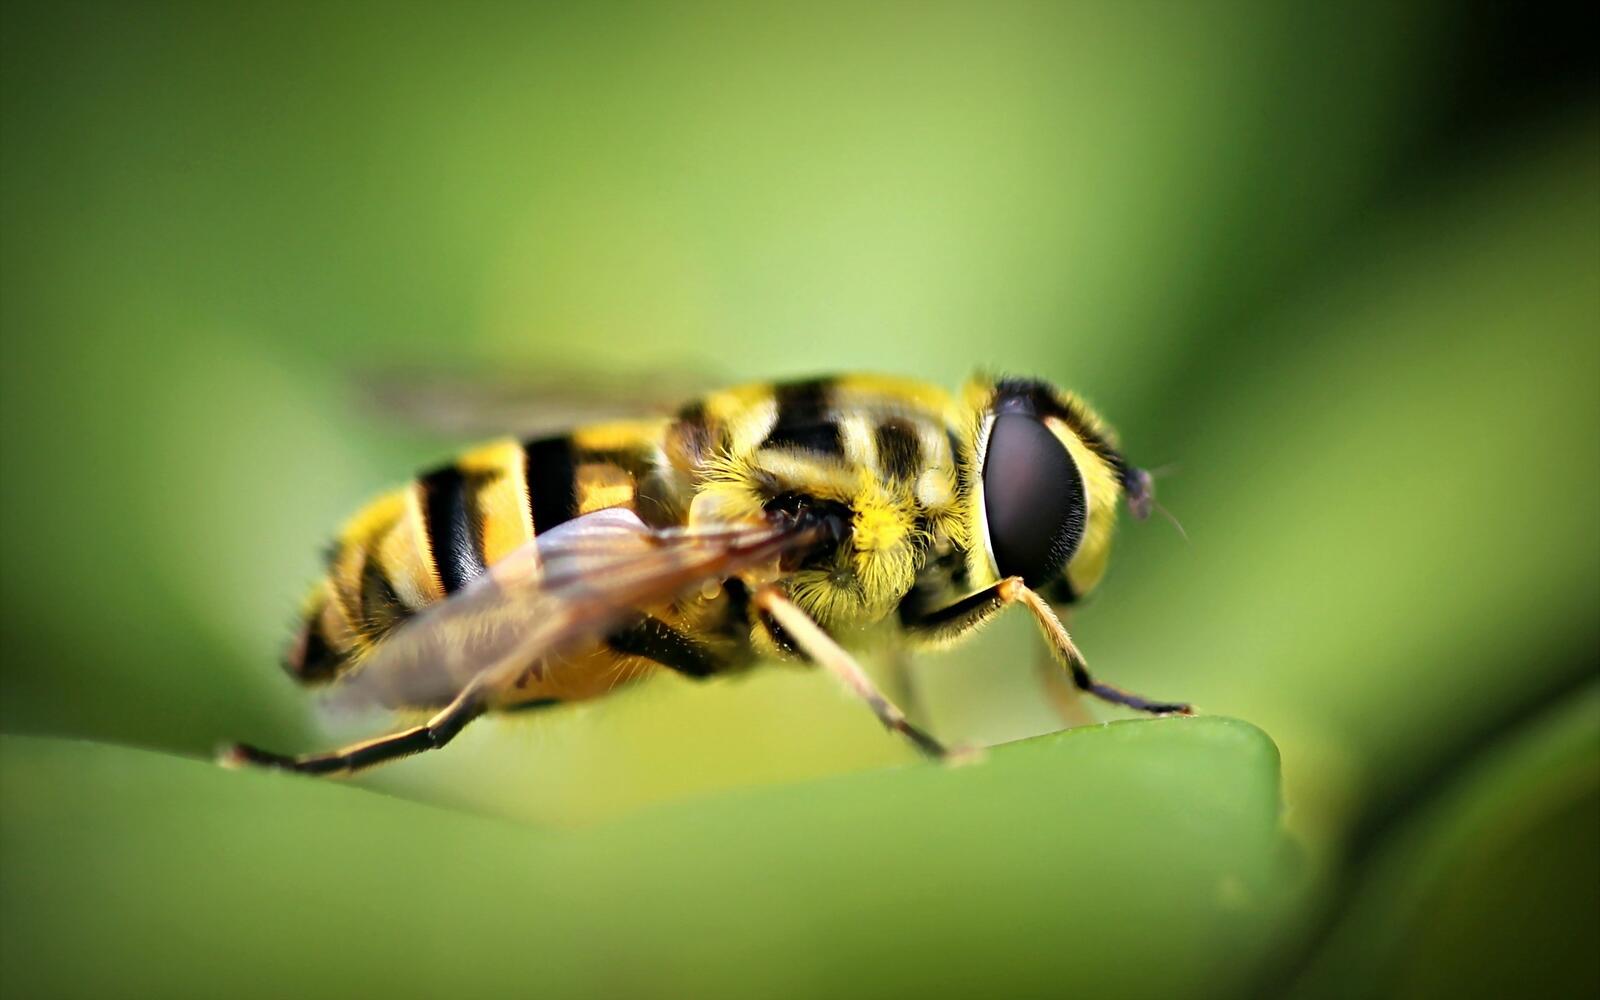 Бесплатное фото Пчела на зеленом листике